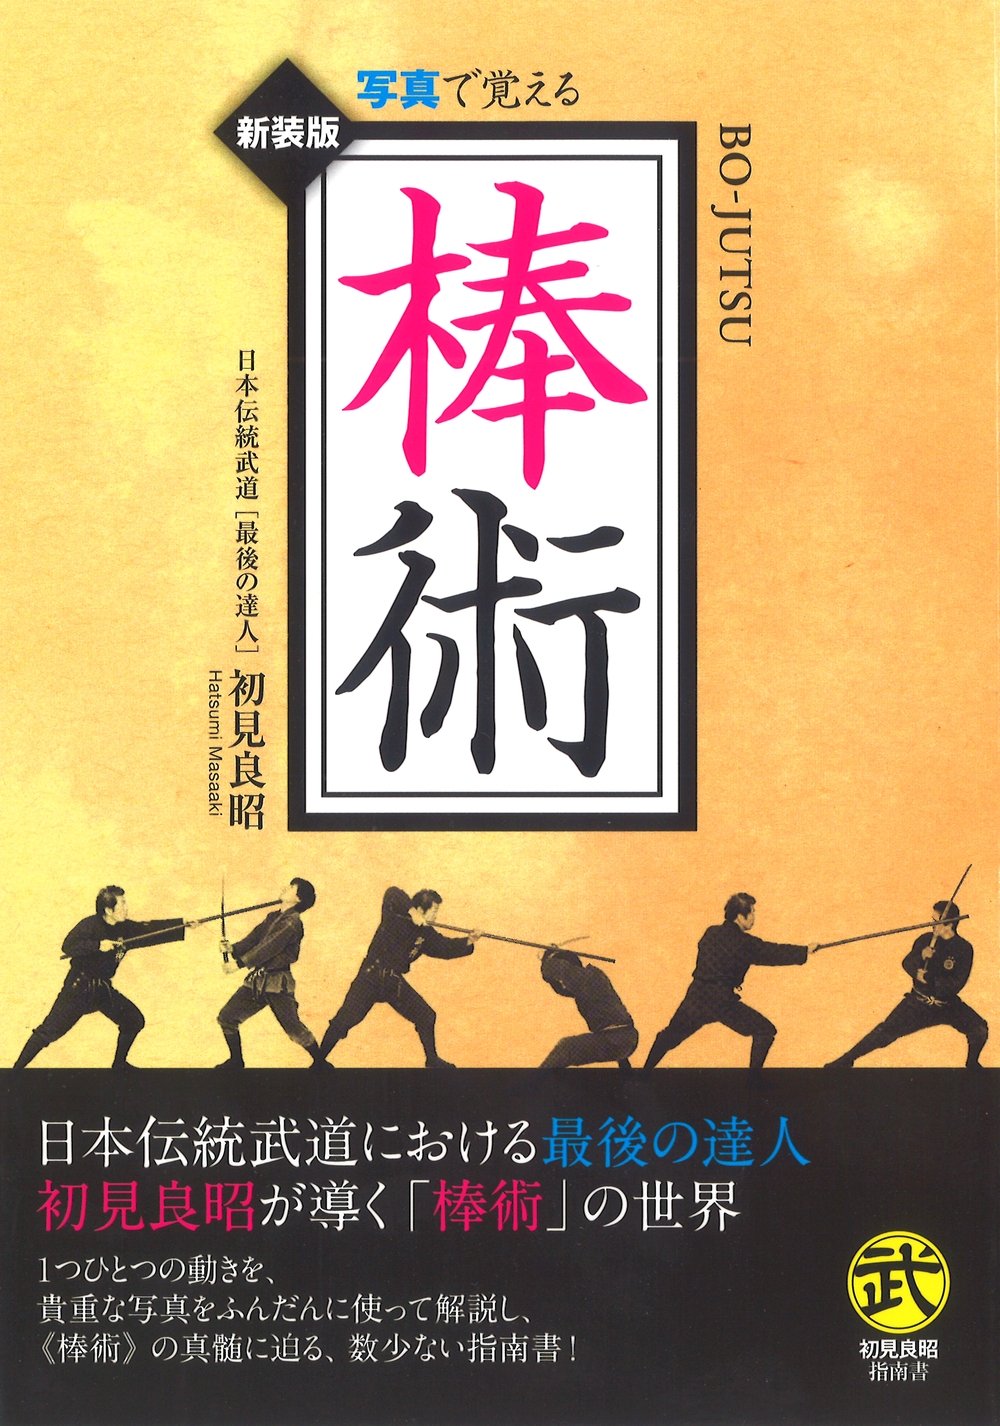 Bojutsu Book by Masaaki Hatsumi - Budovideos